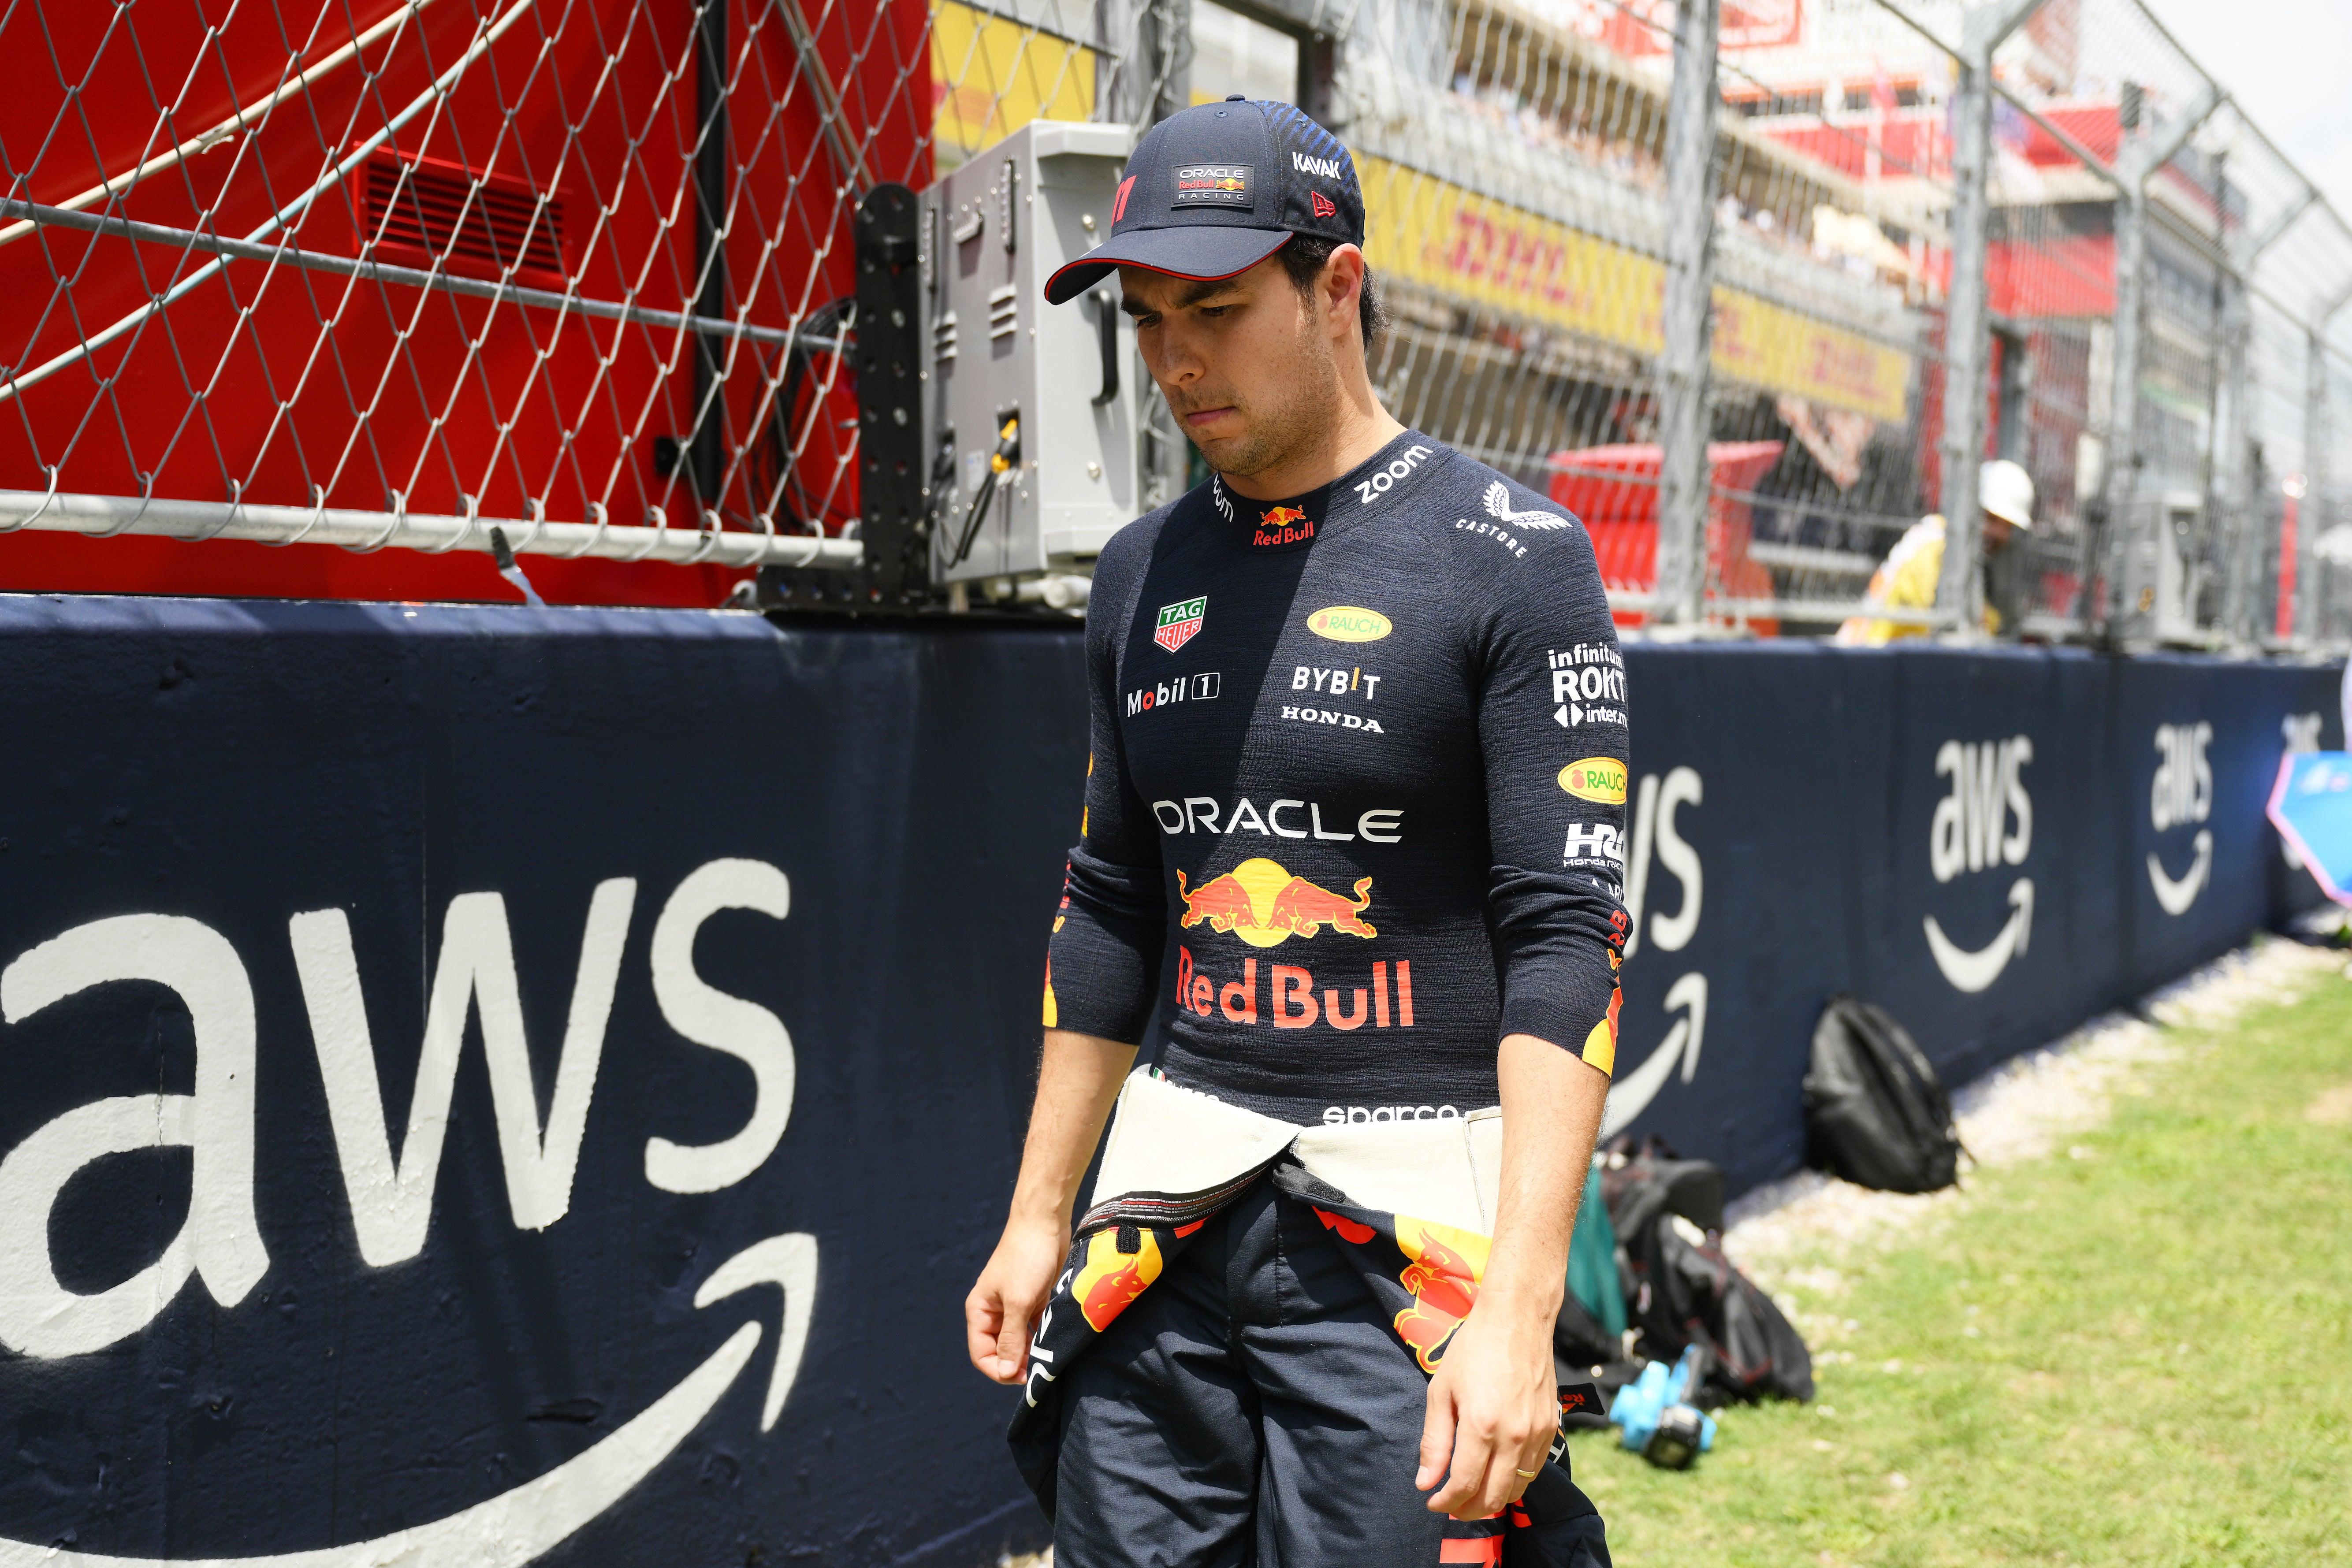 Red Bull Racing Formula 1 Bag / Max Verstappen / Sergio Perez 